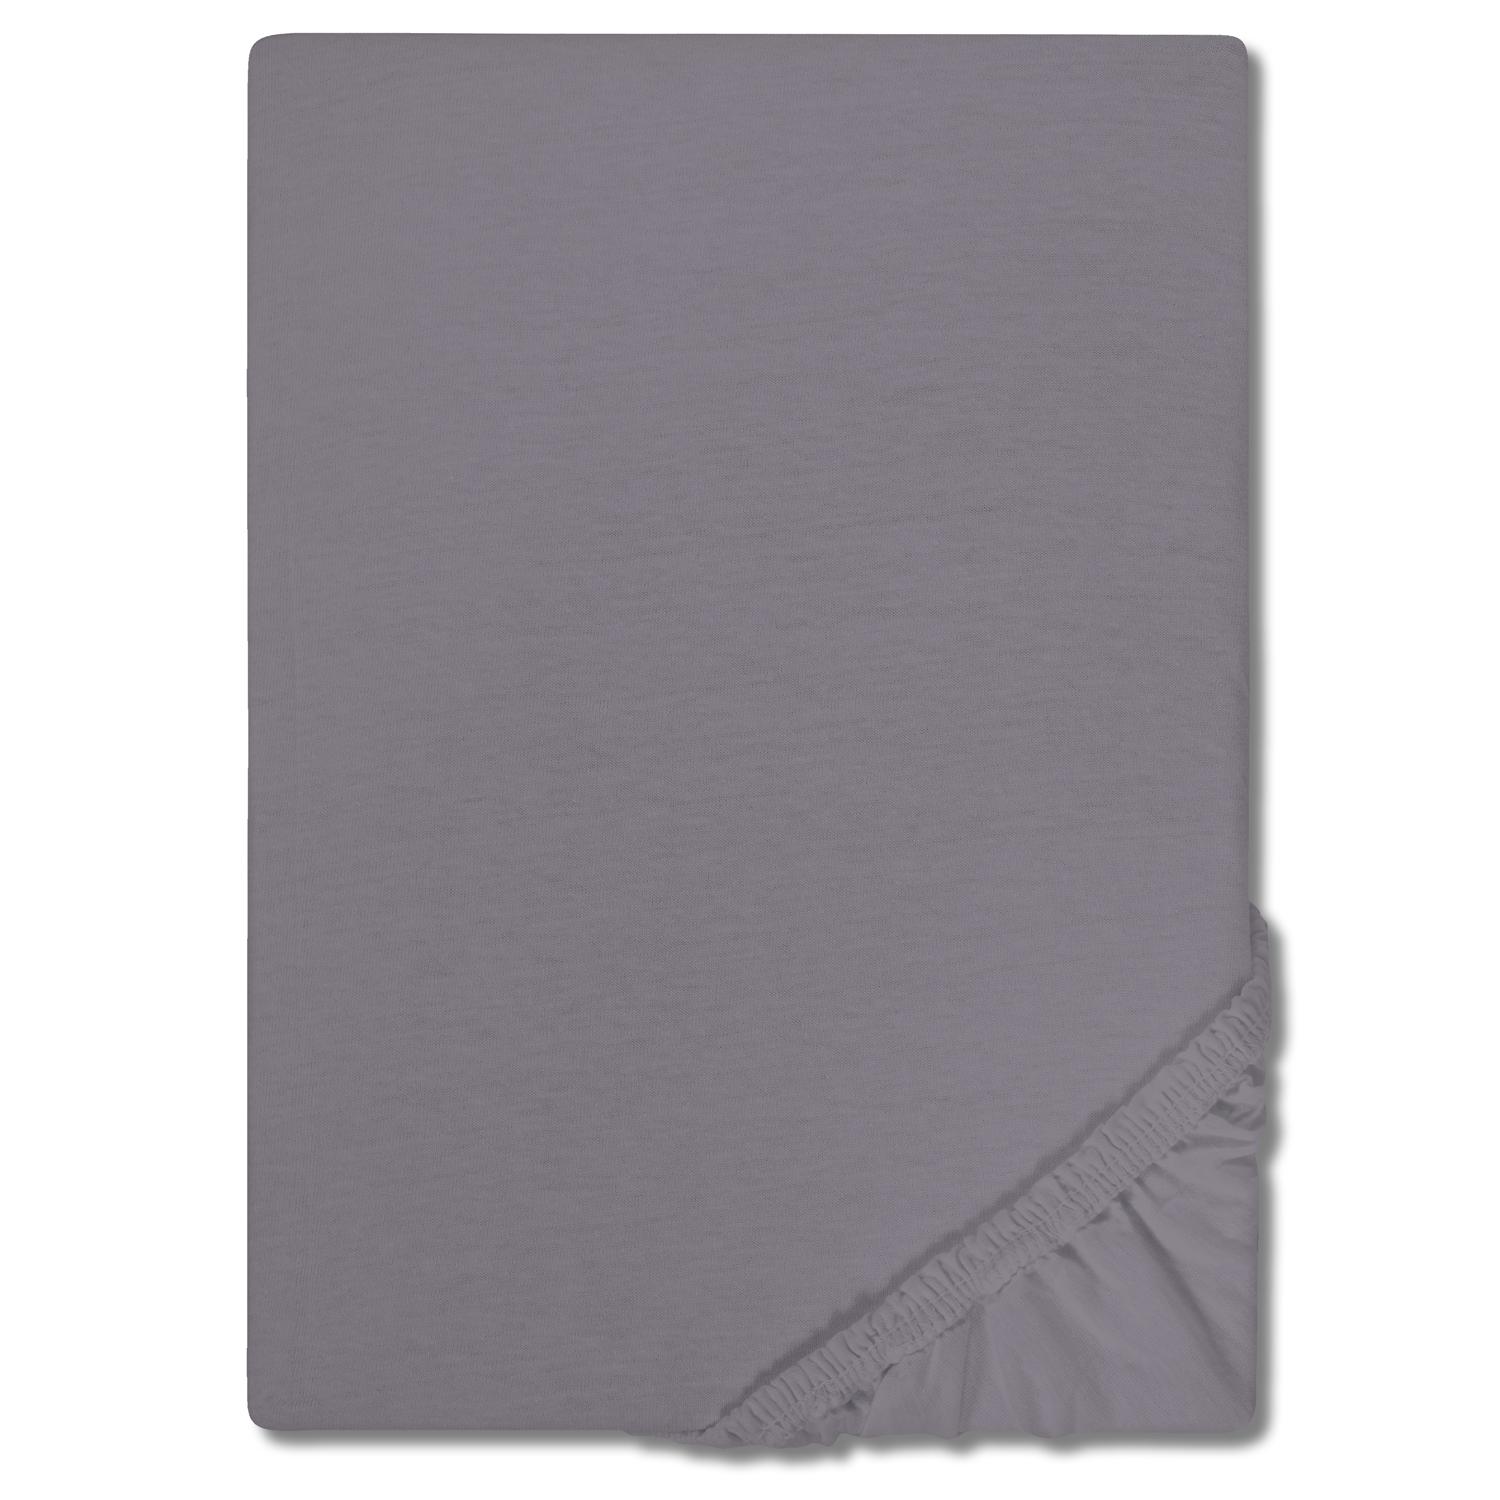 CloudComfort Basic fitted sheet jersey stretch dark gray 180 x 200 - 200 x 200 cm